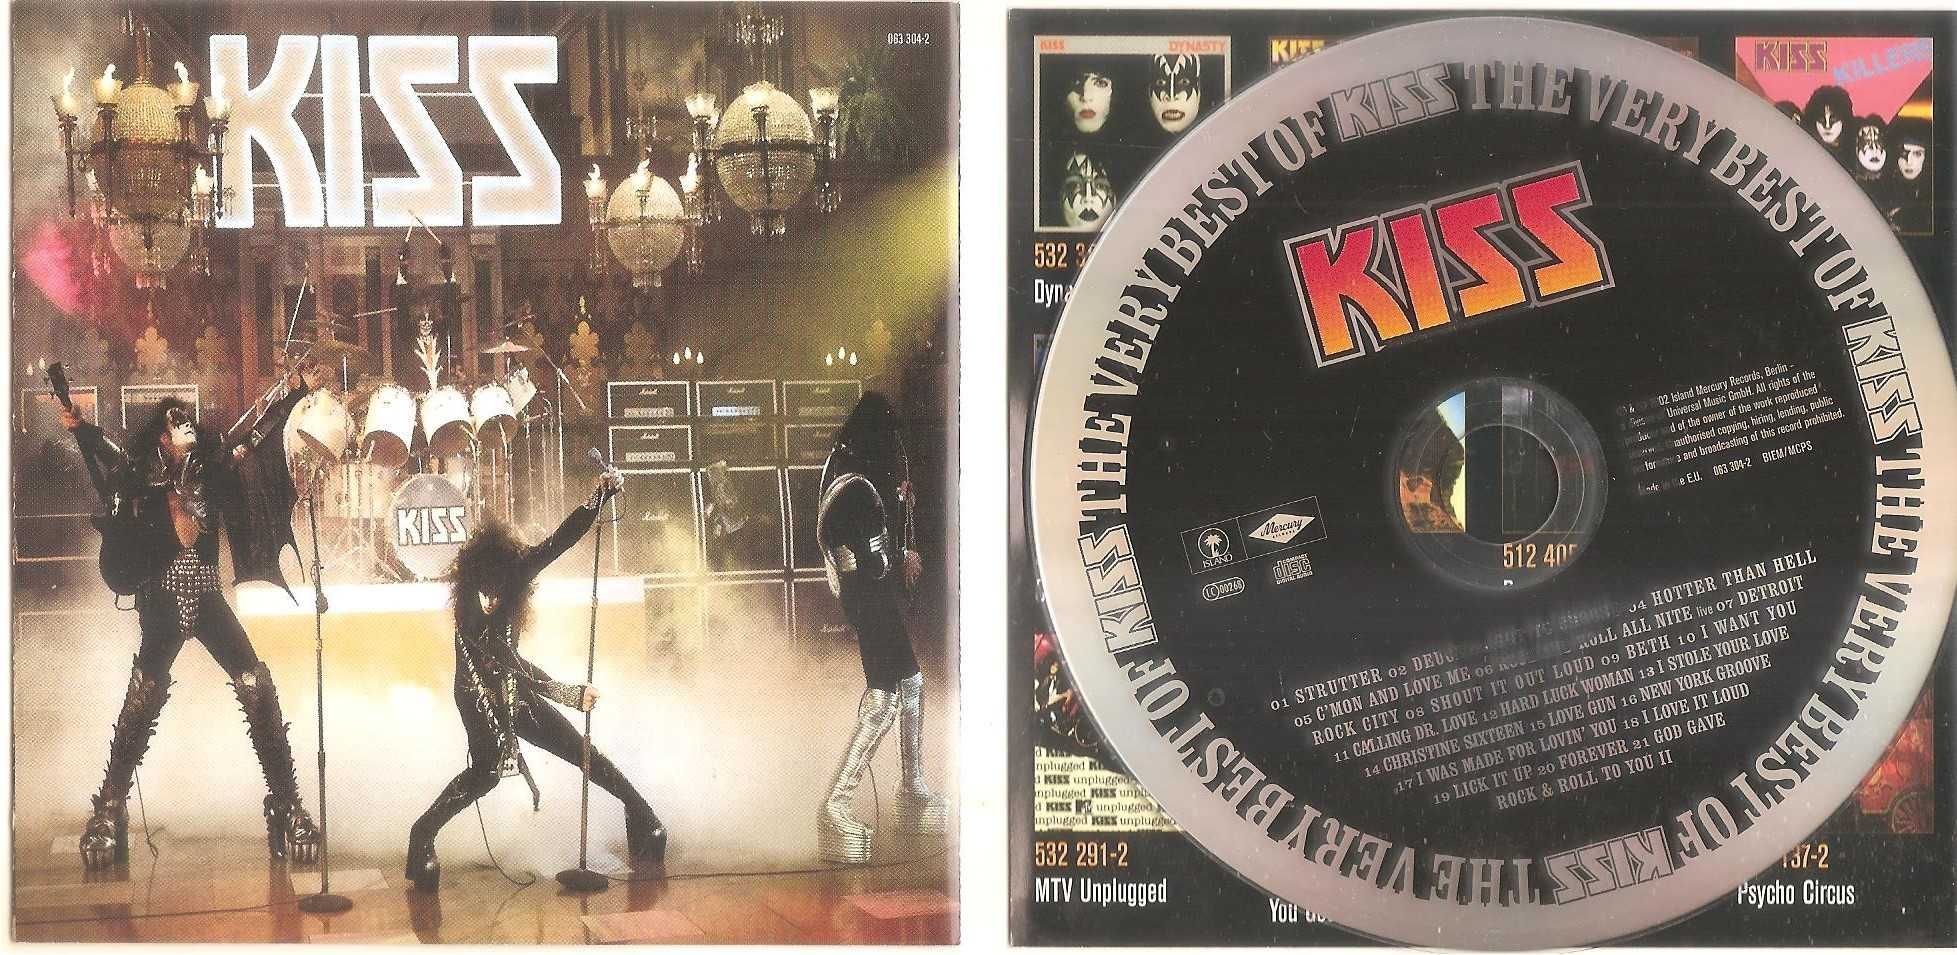 KISS - The Very Best Kiss - CD 2002 r. Island Mercury Germany